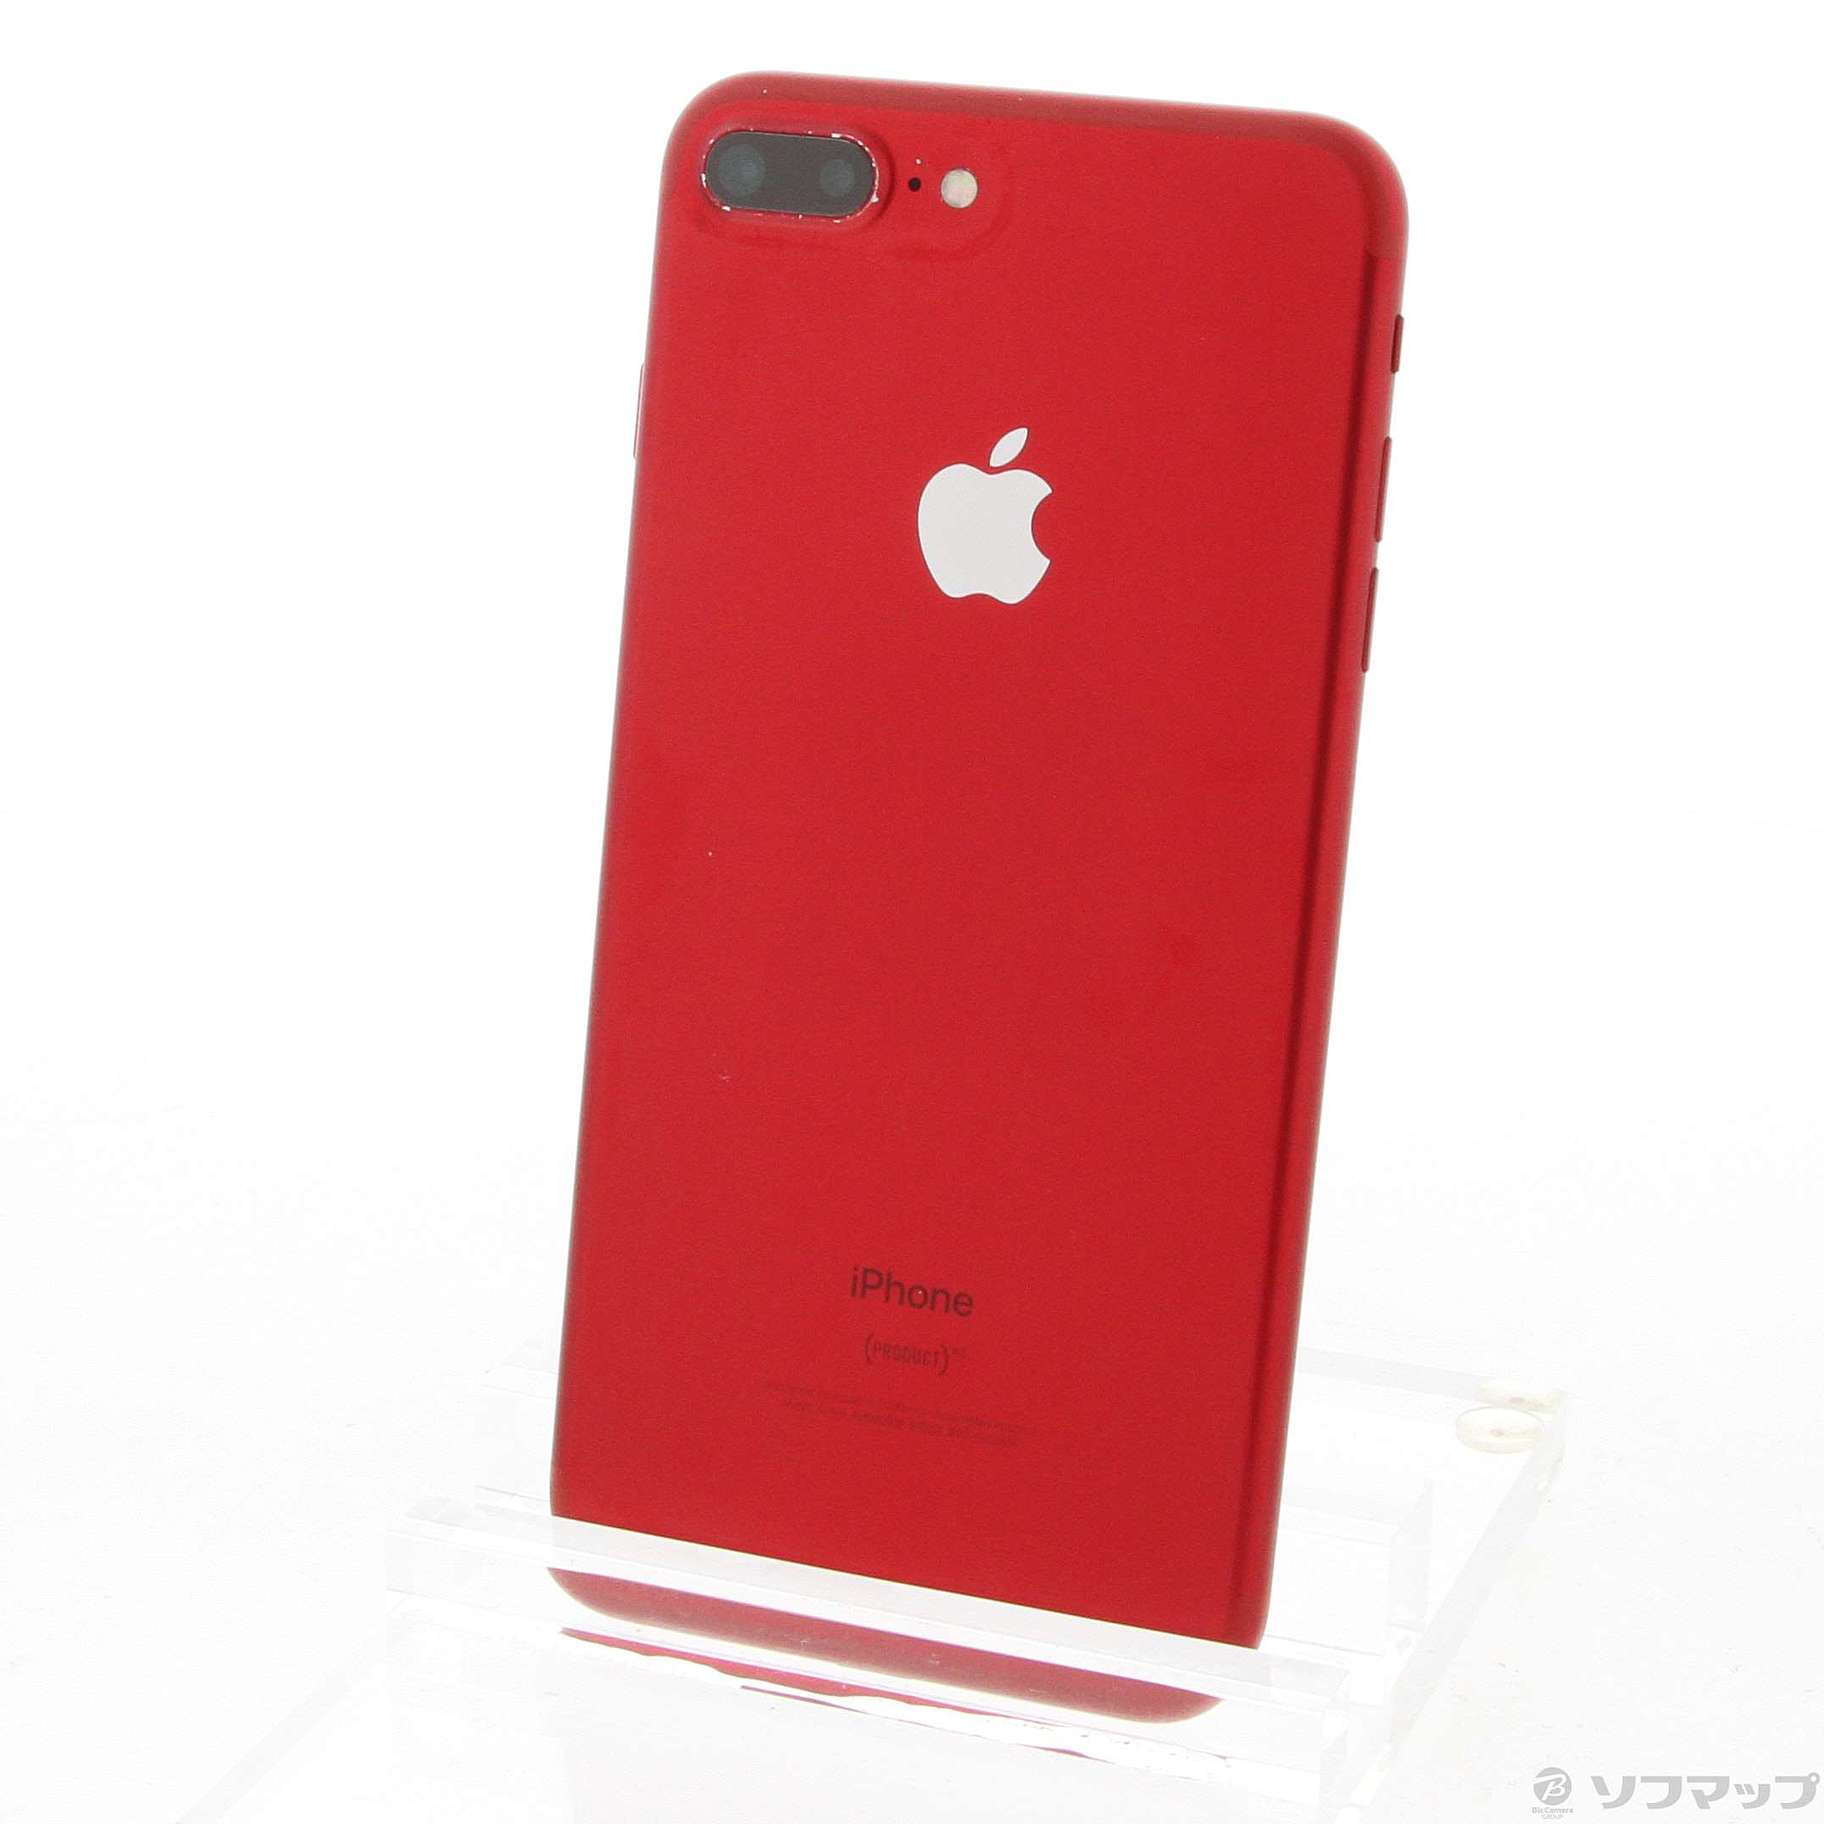 iPhone 7 Plus Red レッド 256 GB SIMフリー - スマートフォン本体